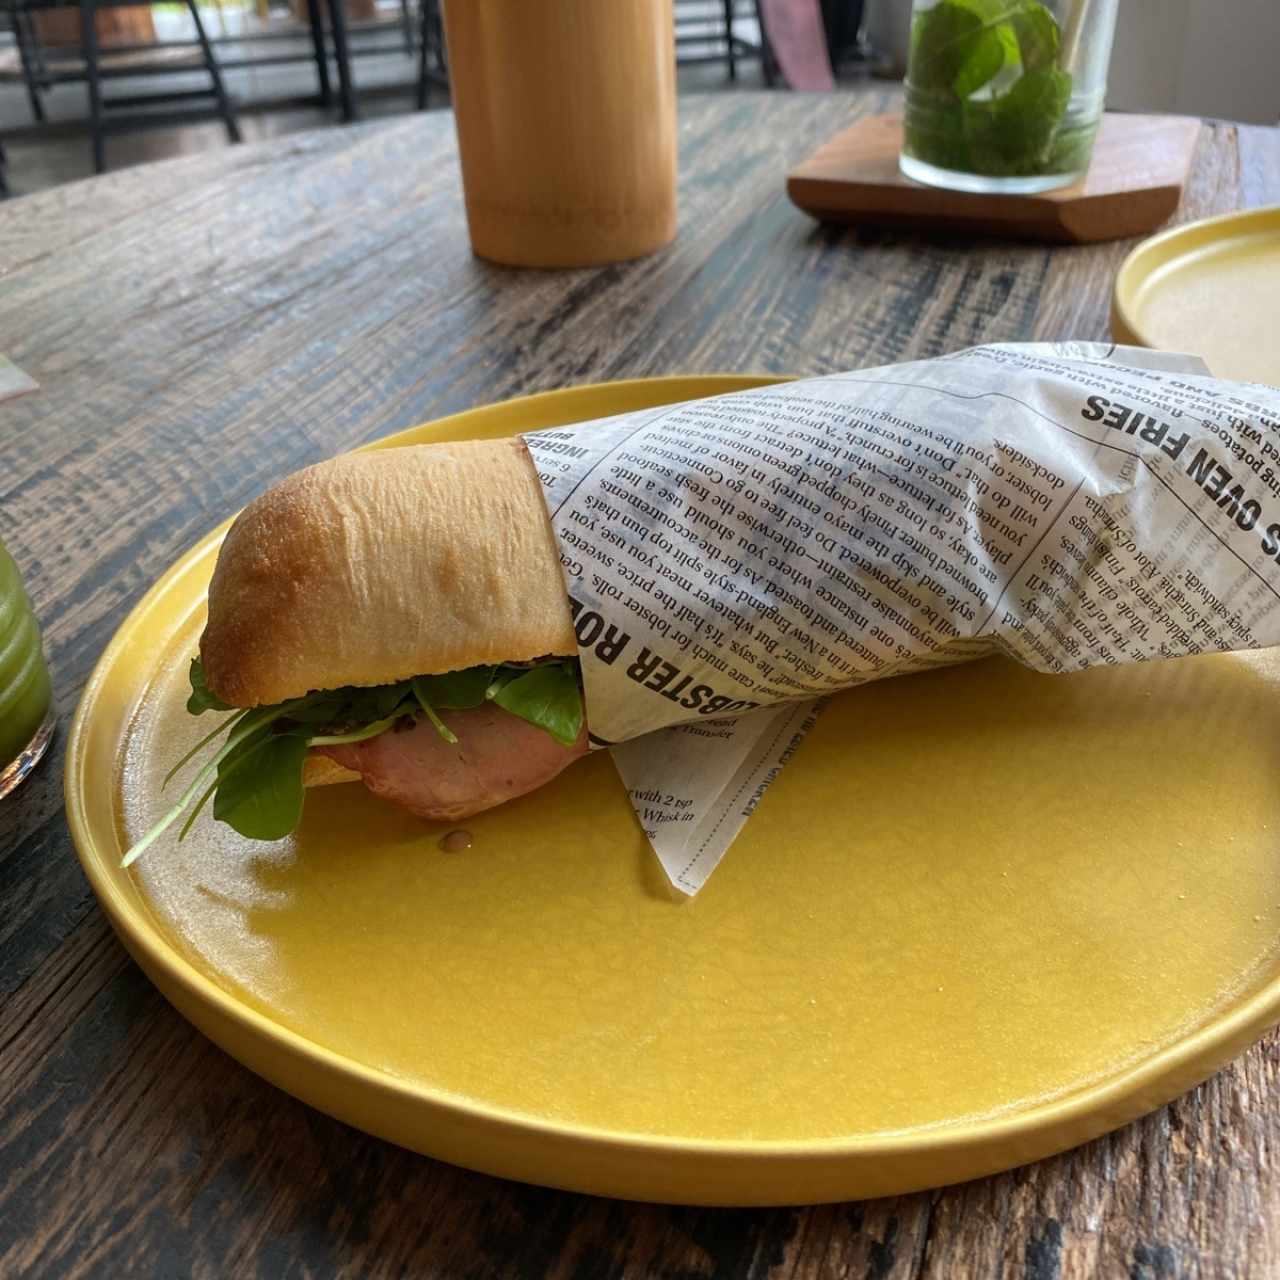 rostbeef sandwich